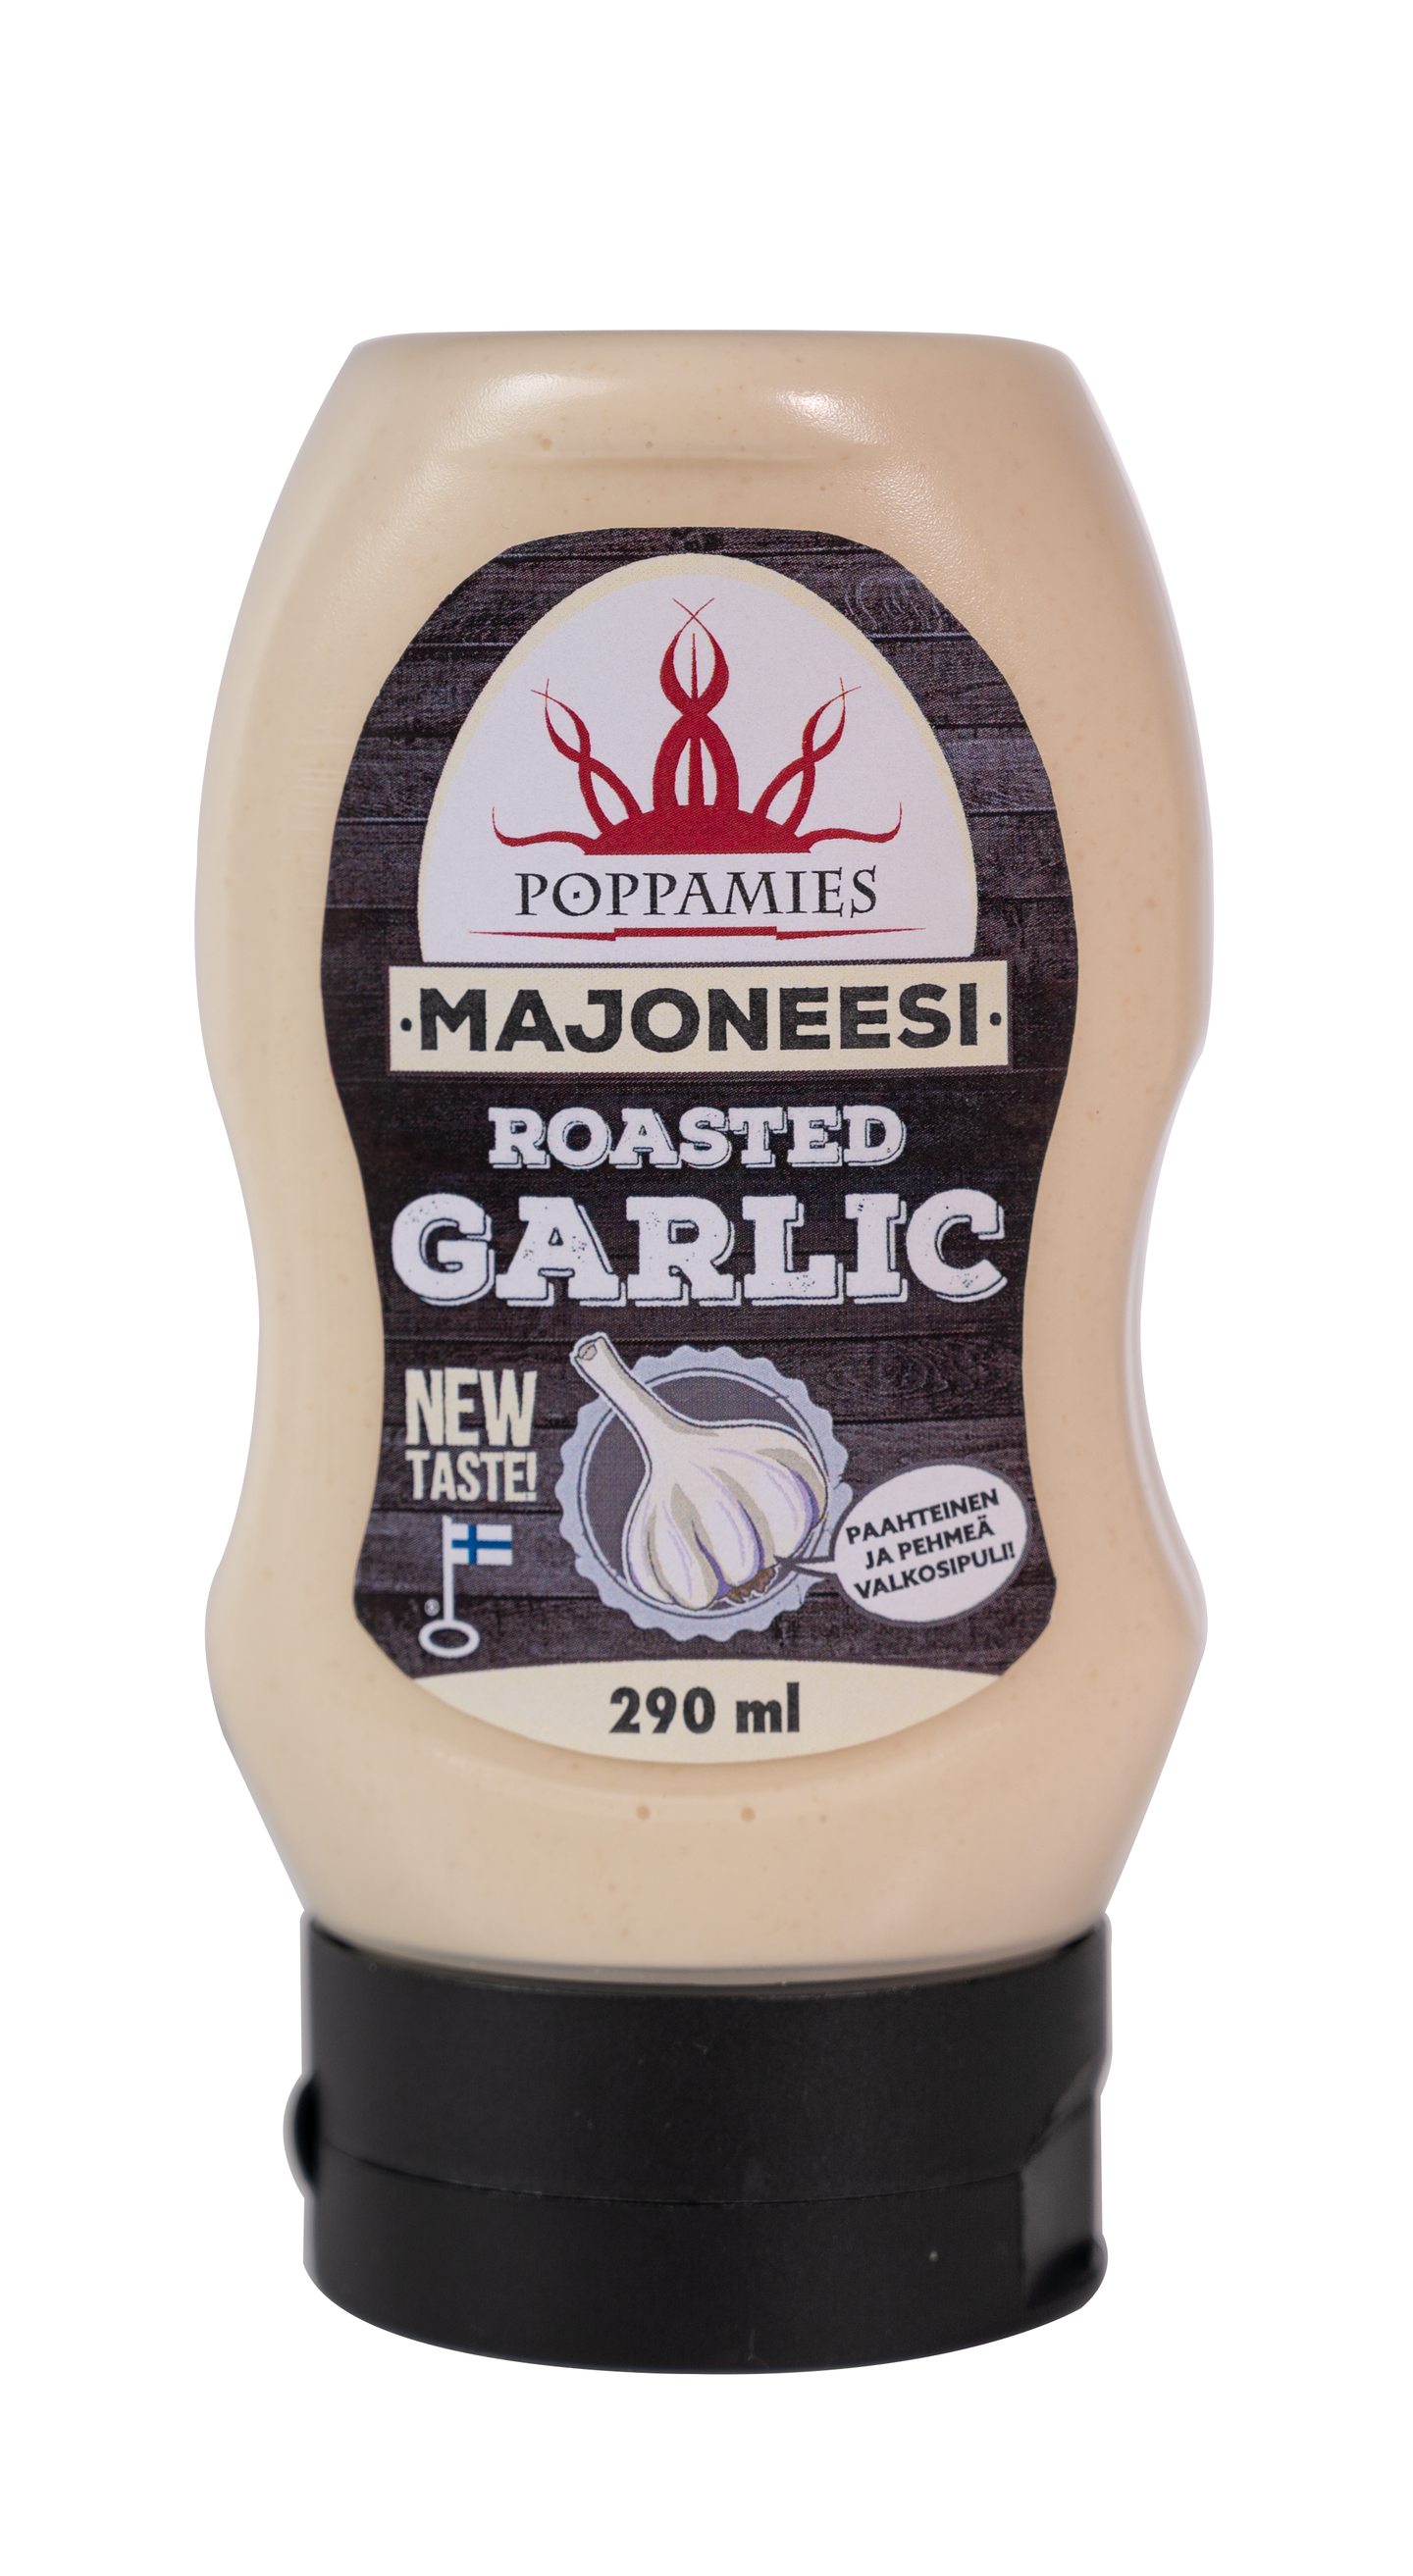 Poppamies roasted garlic majoneesi 290ml